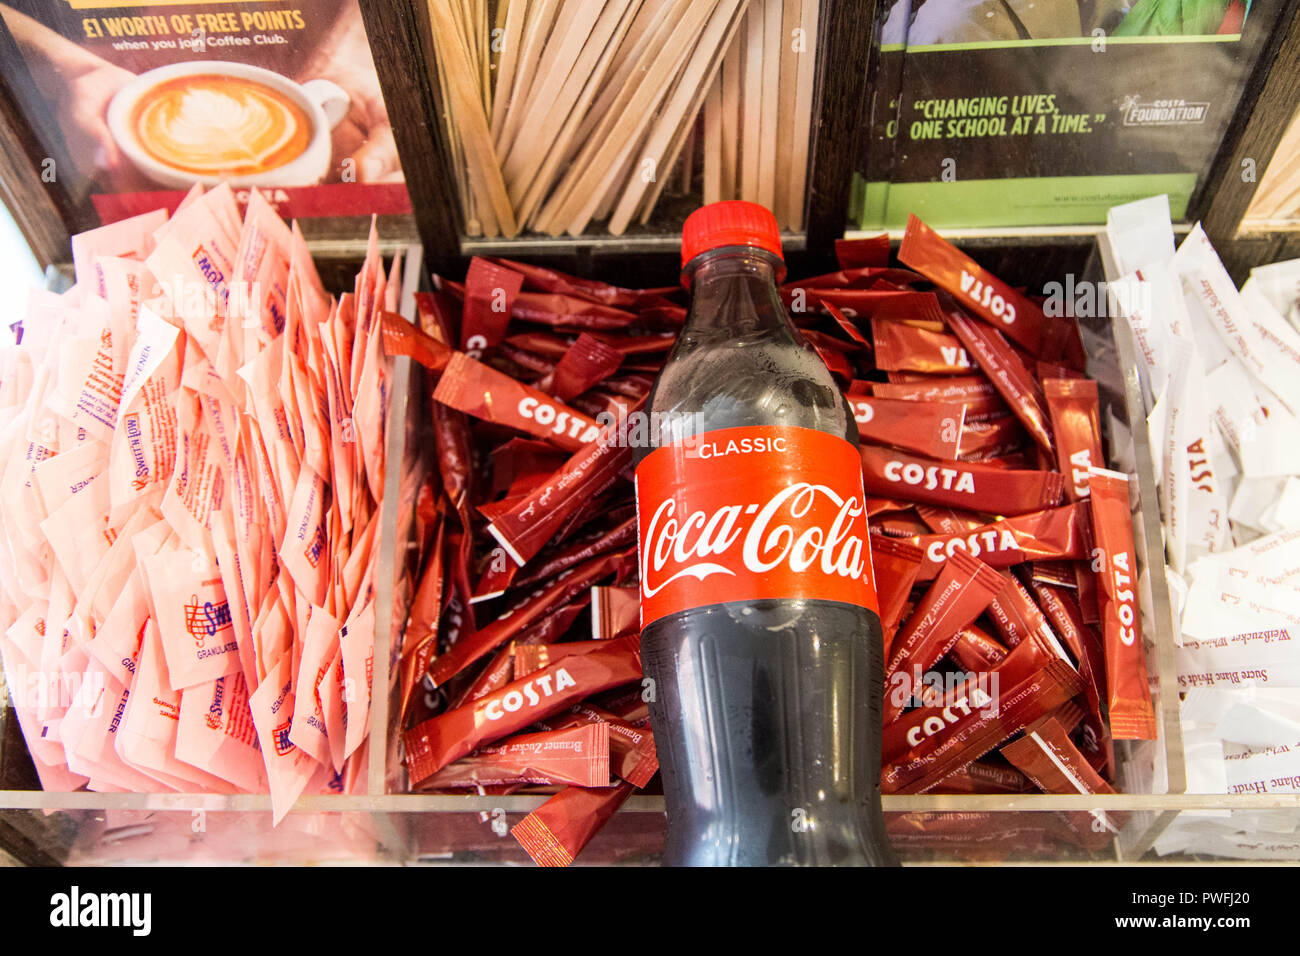 Coca cola bottle in Costa coffee shop editorial image. Stock Photo